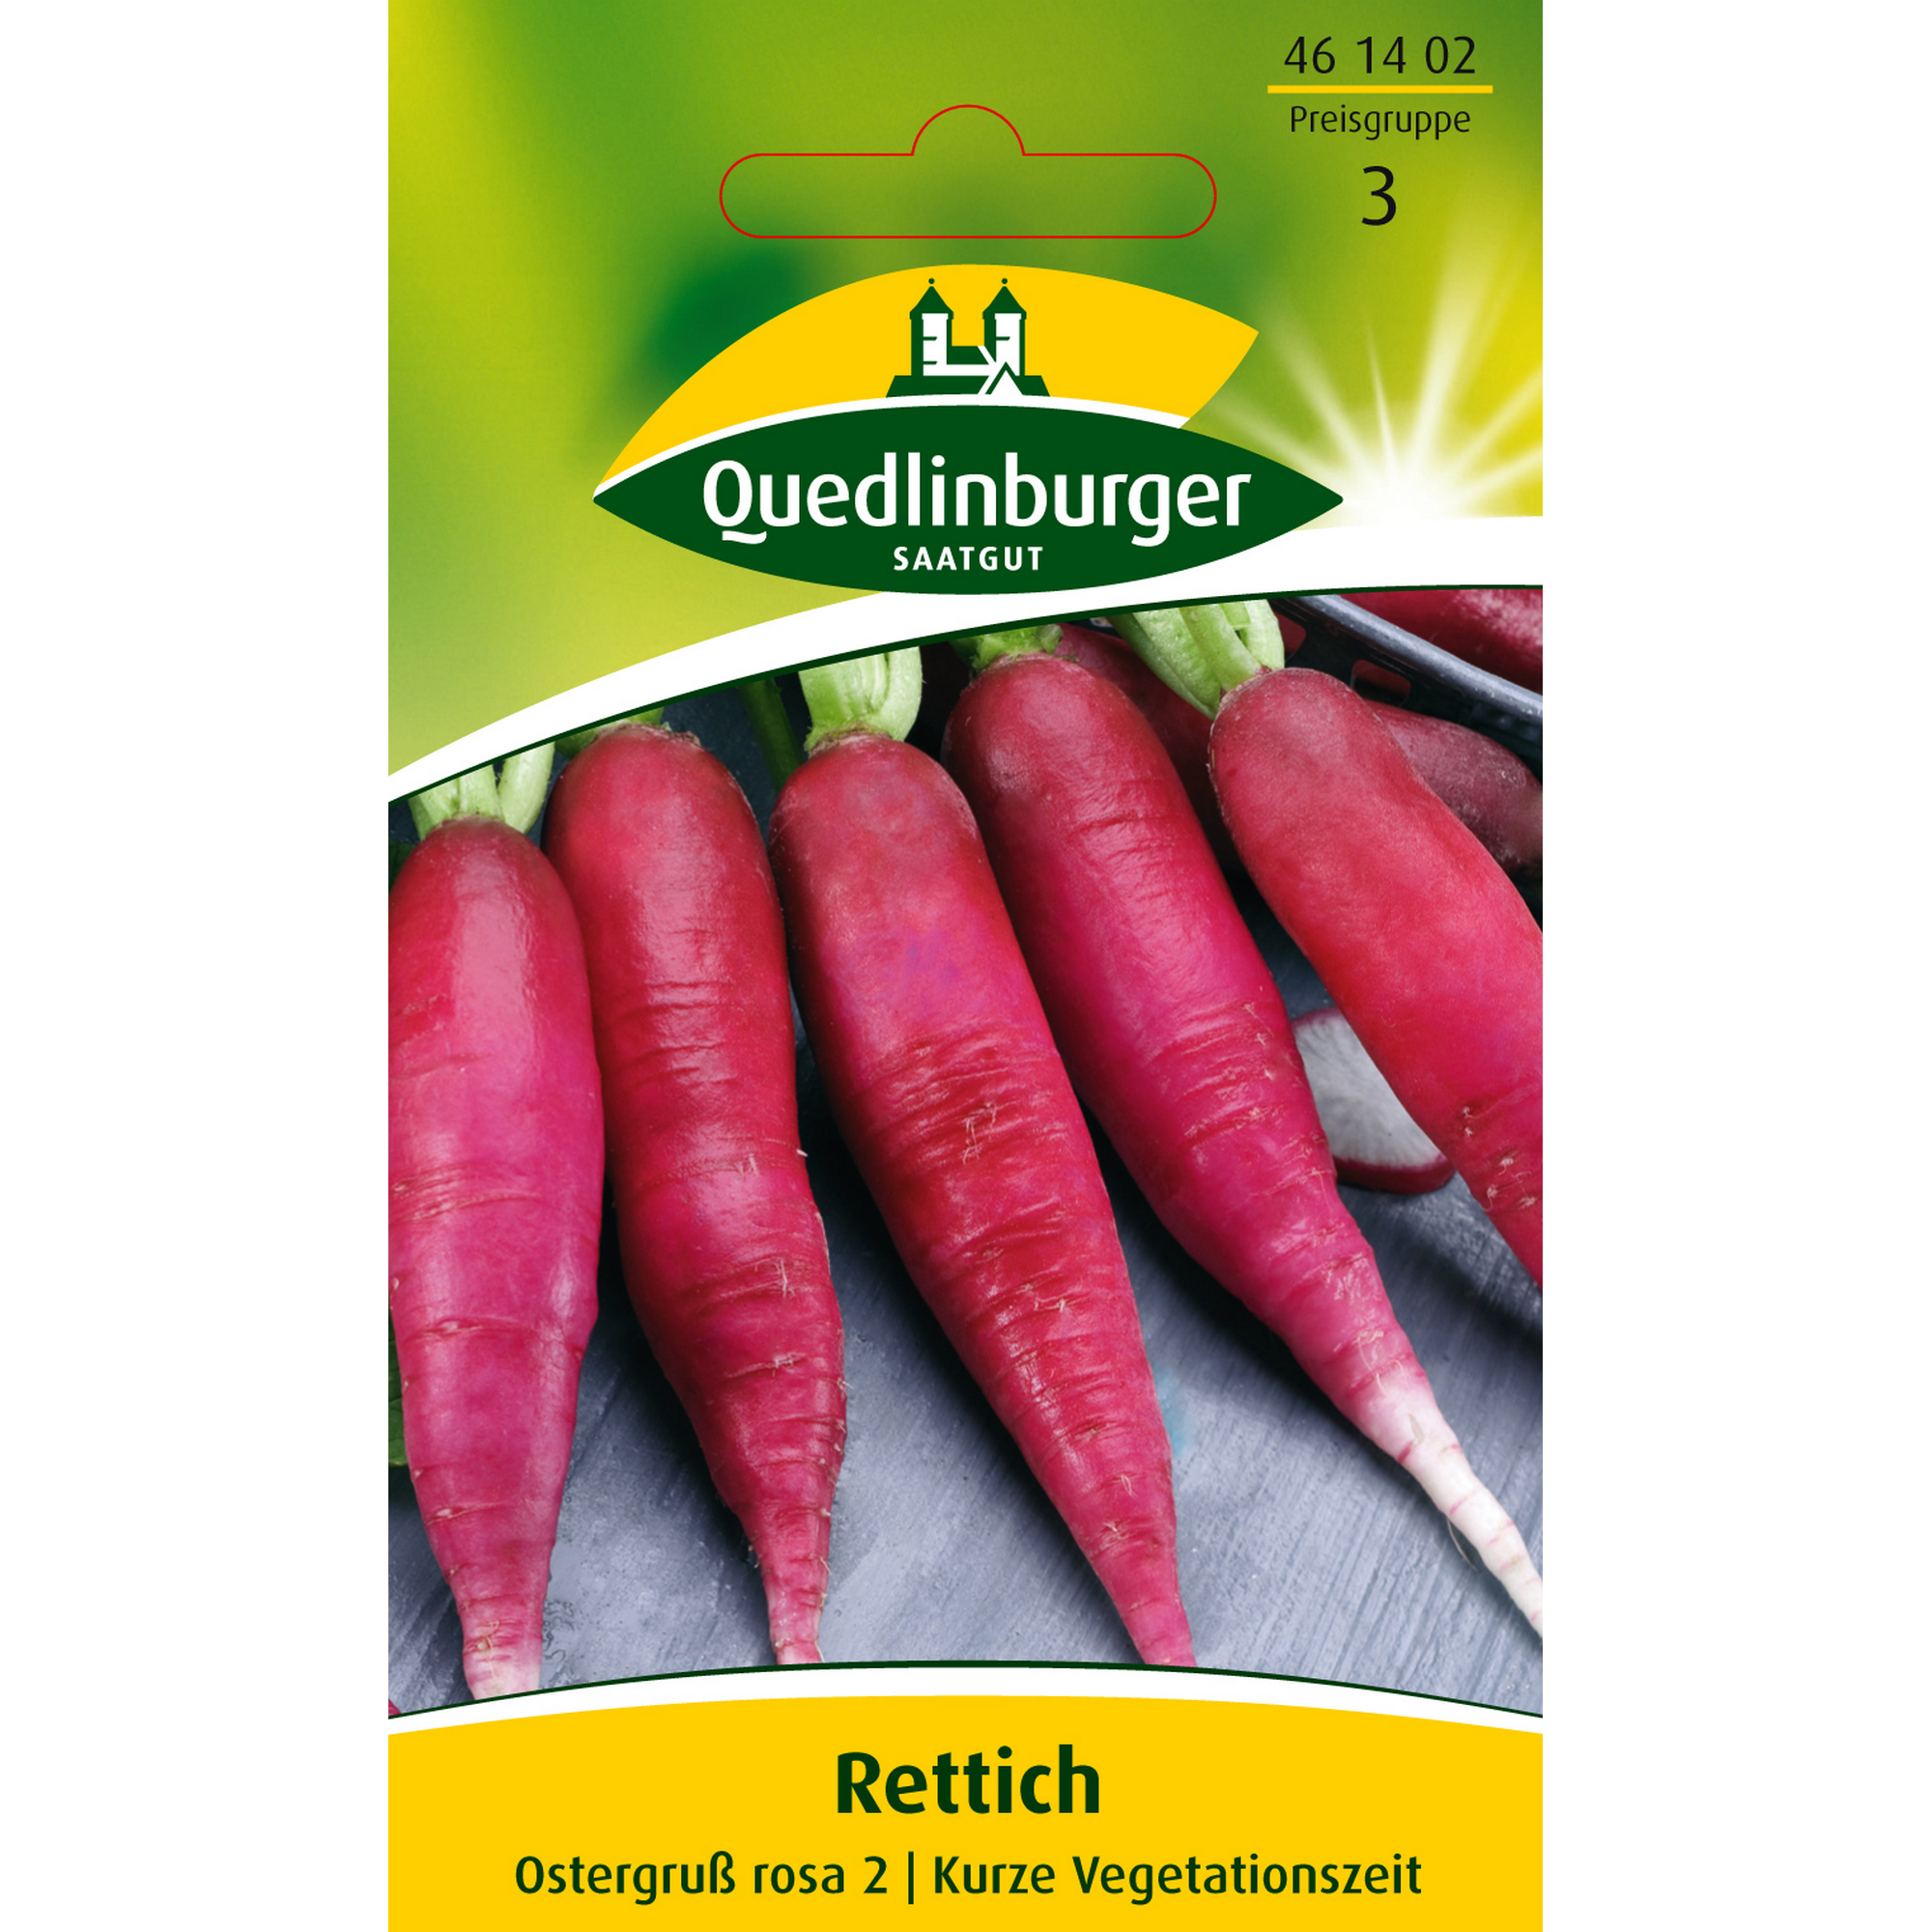 Rettich 'Ostergruss rosa 2' + product picture